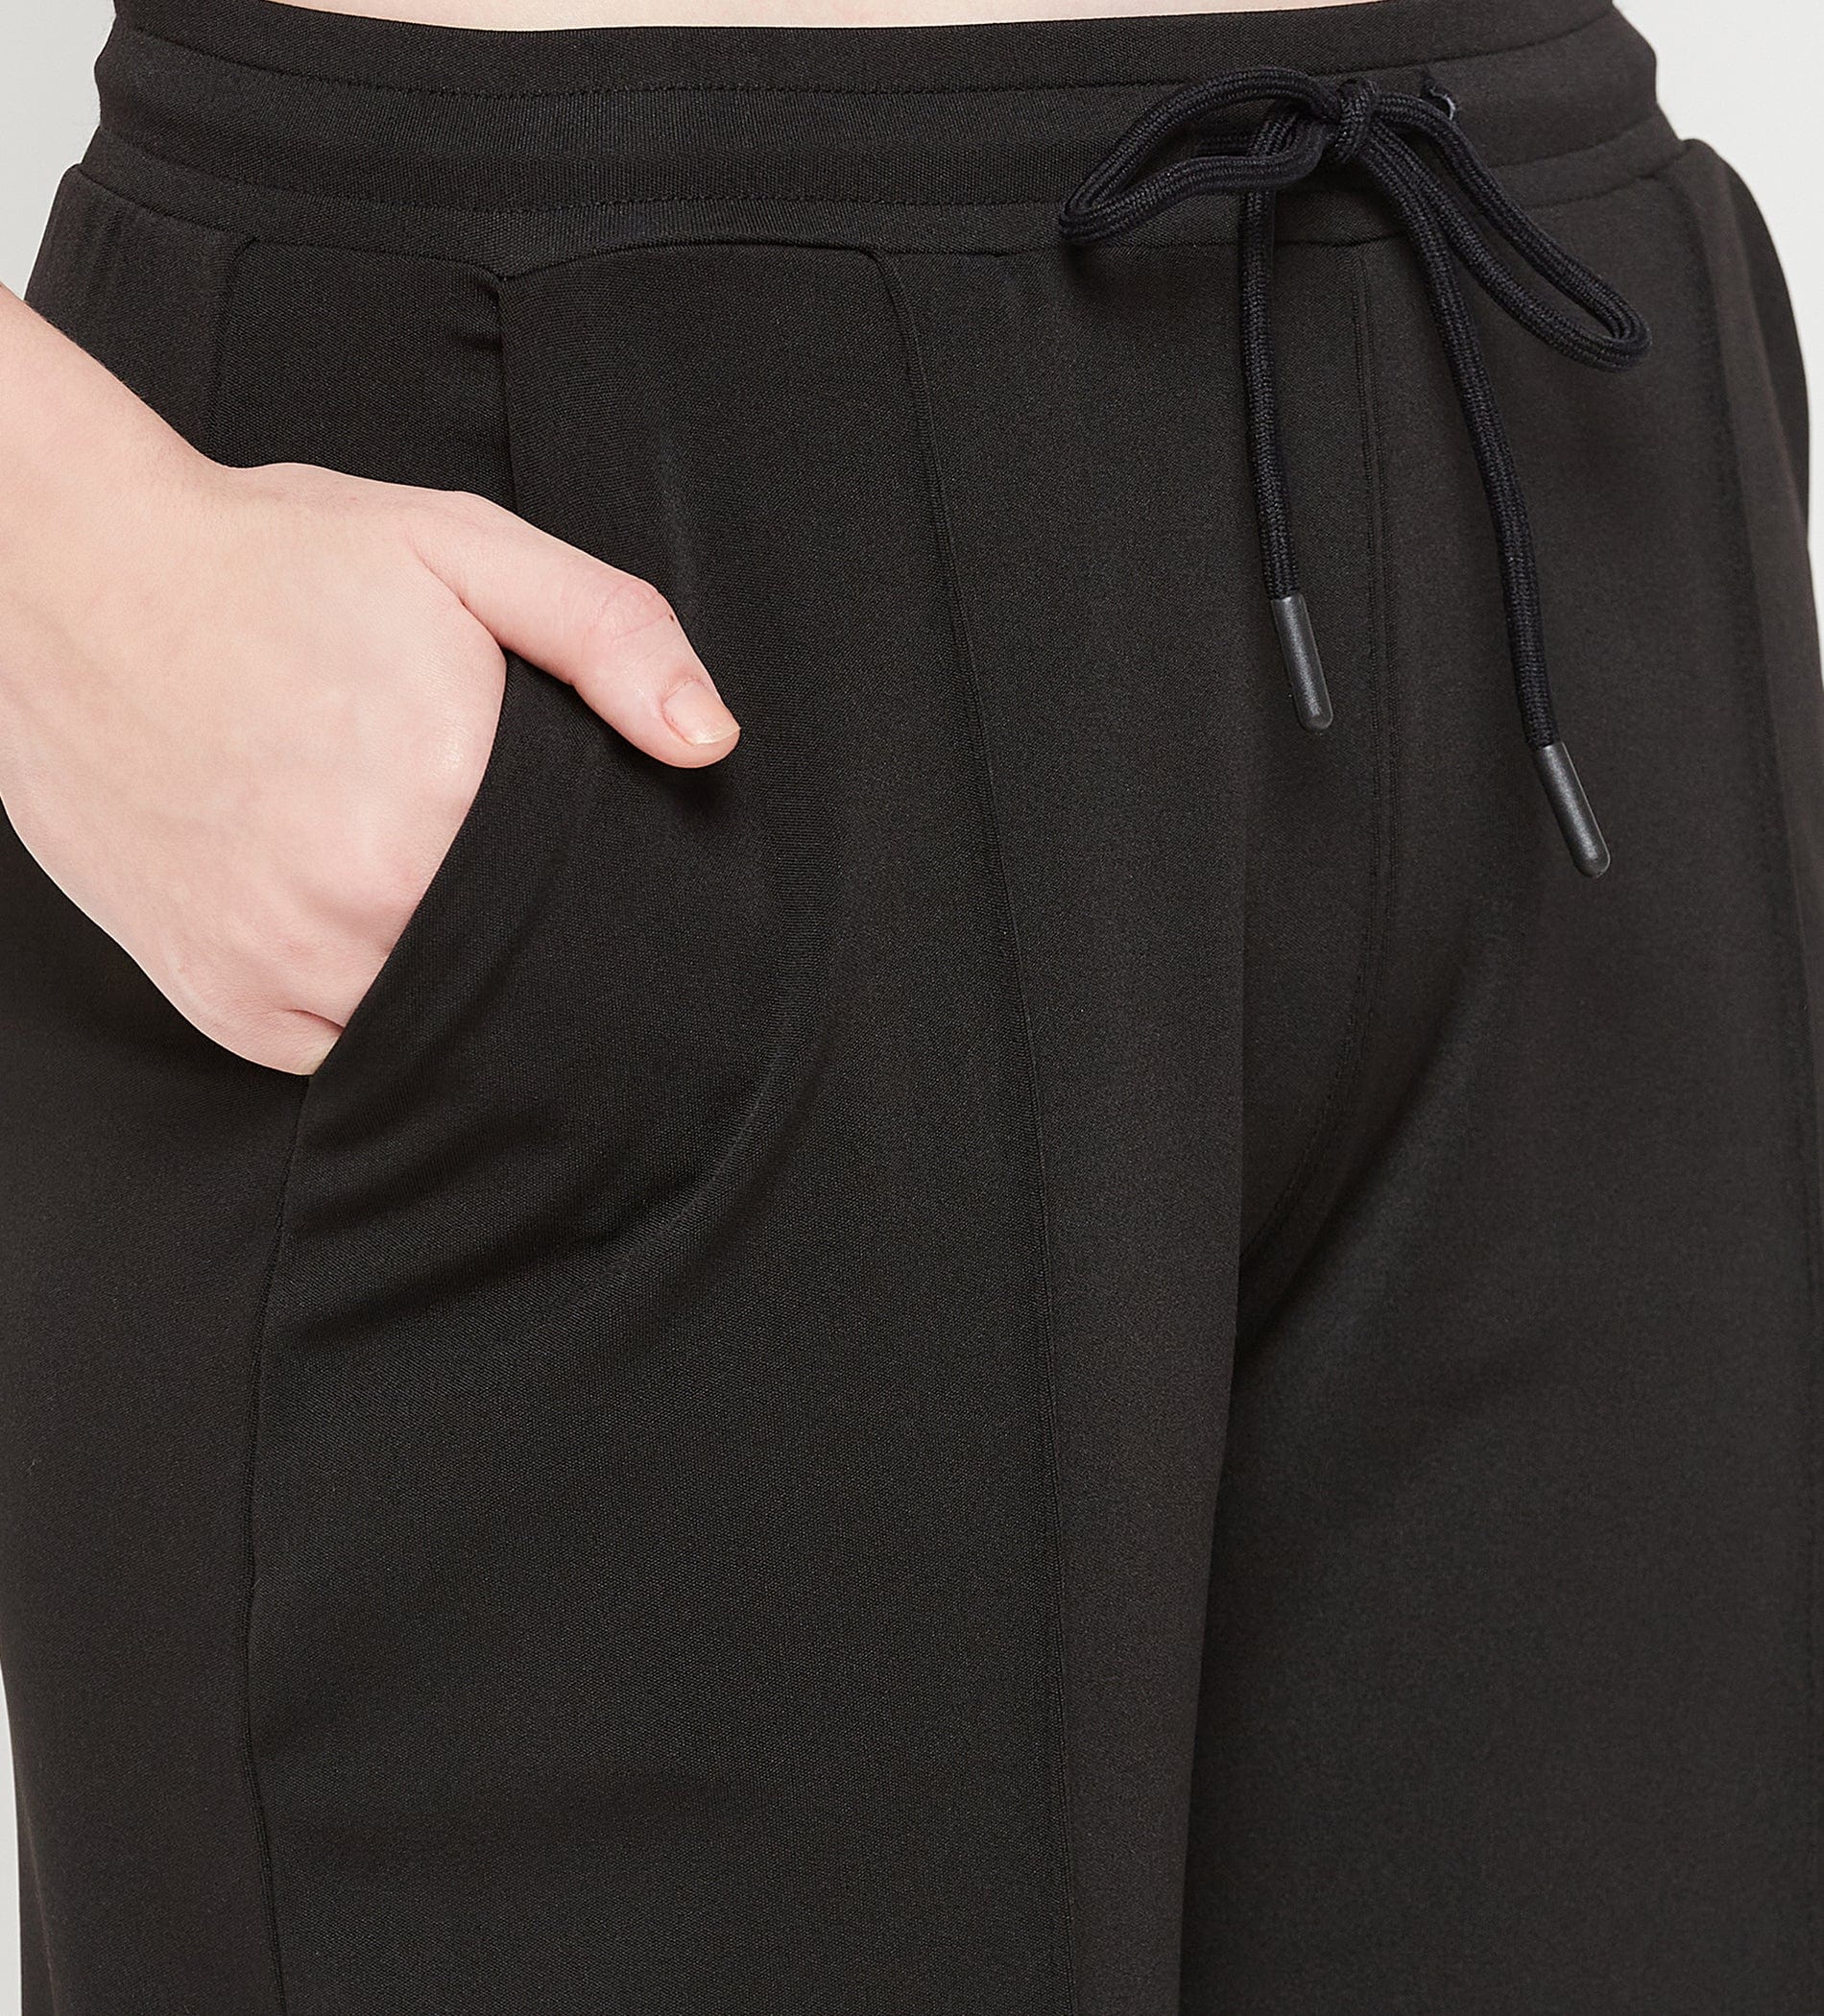 Track Pants Open Bottom Trackpant Black Pin Tuck Pants for Women